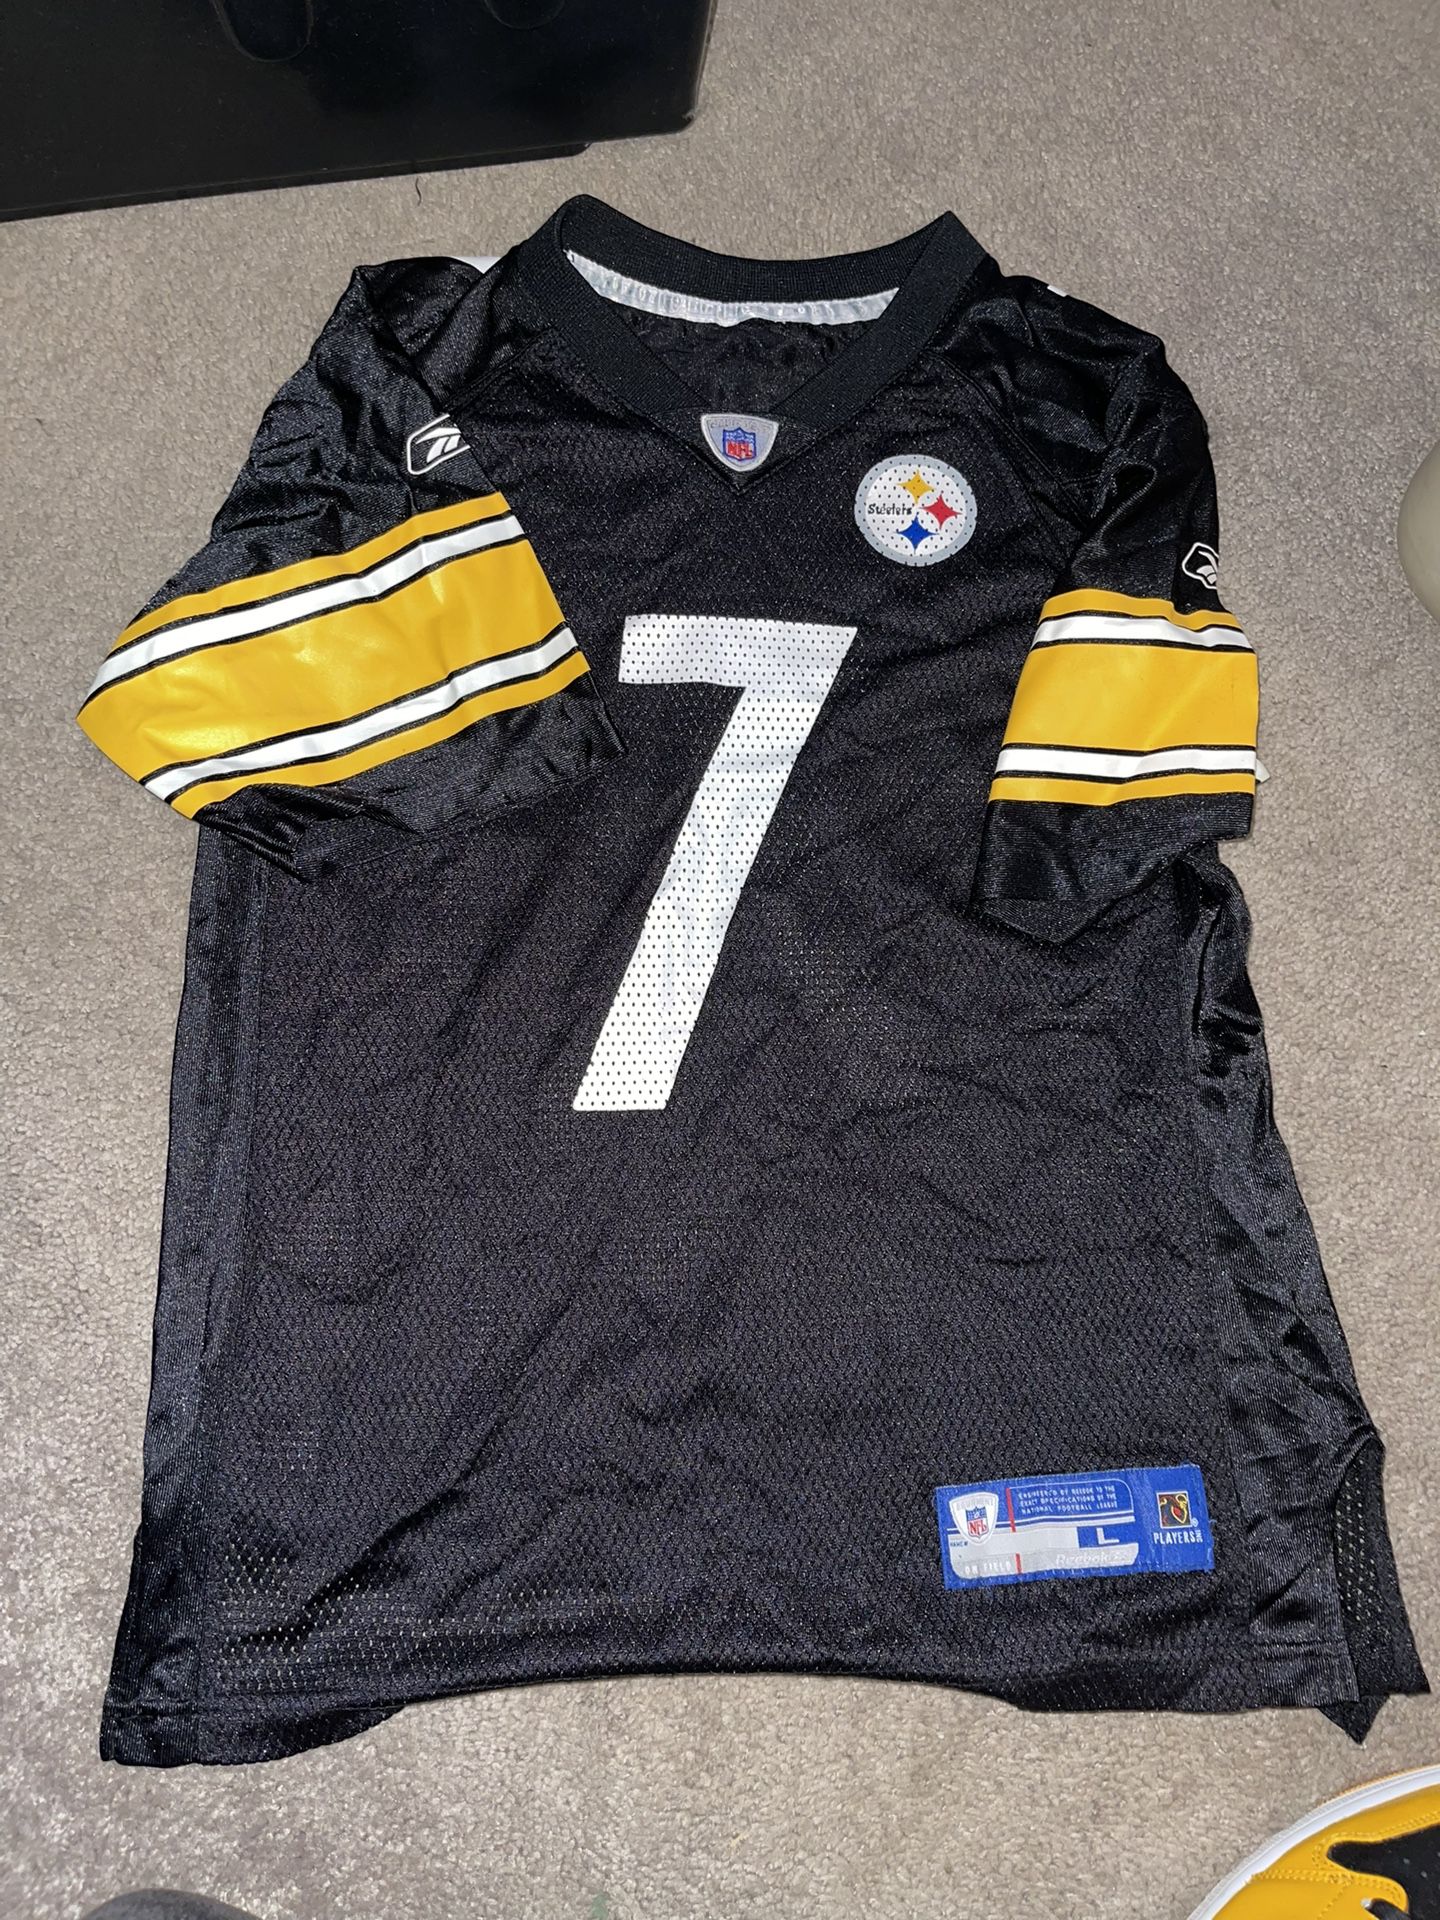 Nfl Reebok Pittsburgh Steelers Ben roethlisberger jersey size large